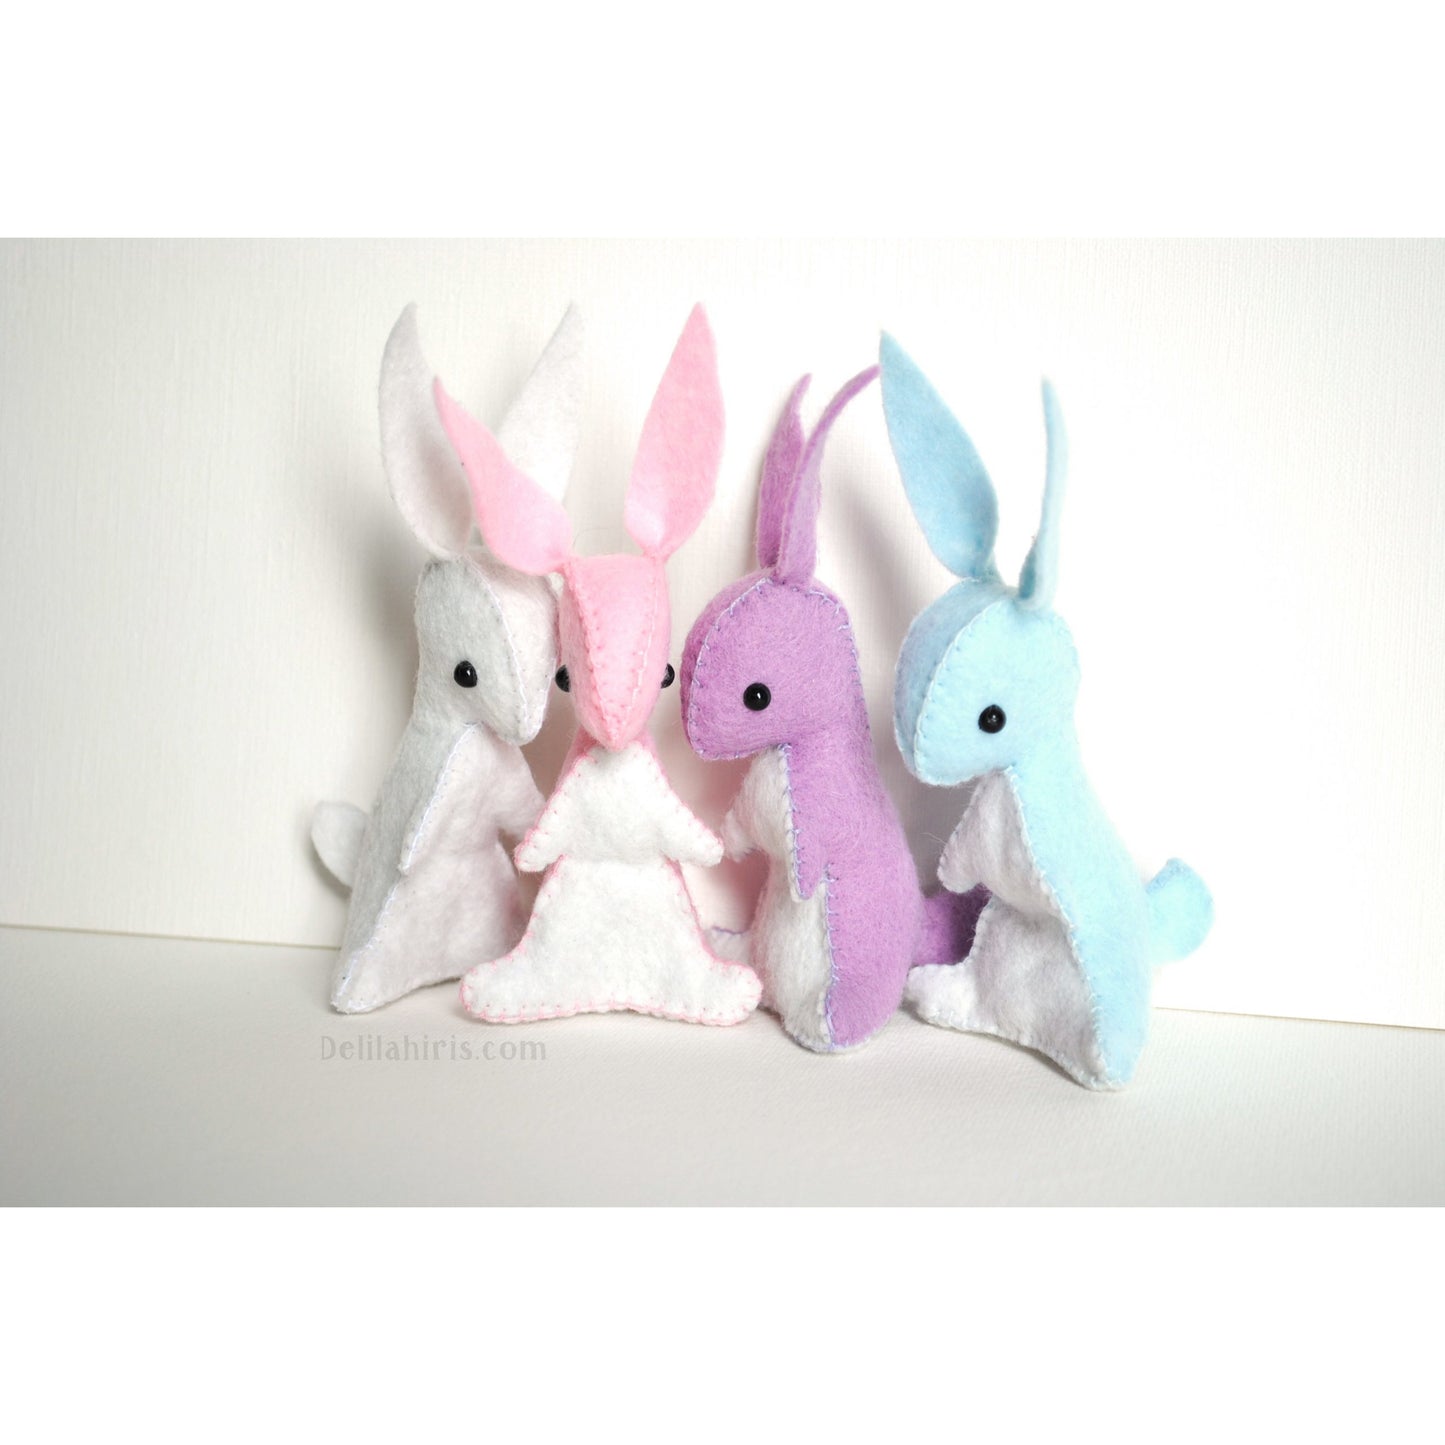 DelilahIris Designs ~ Felt Bunny Sewing Kit